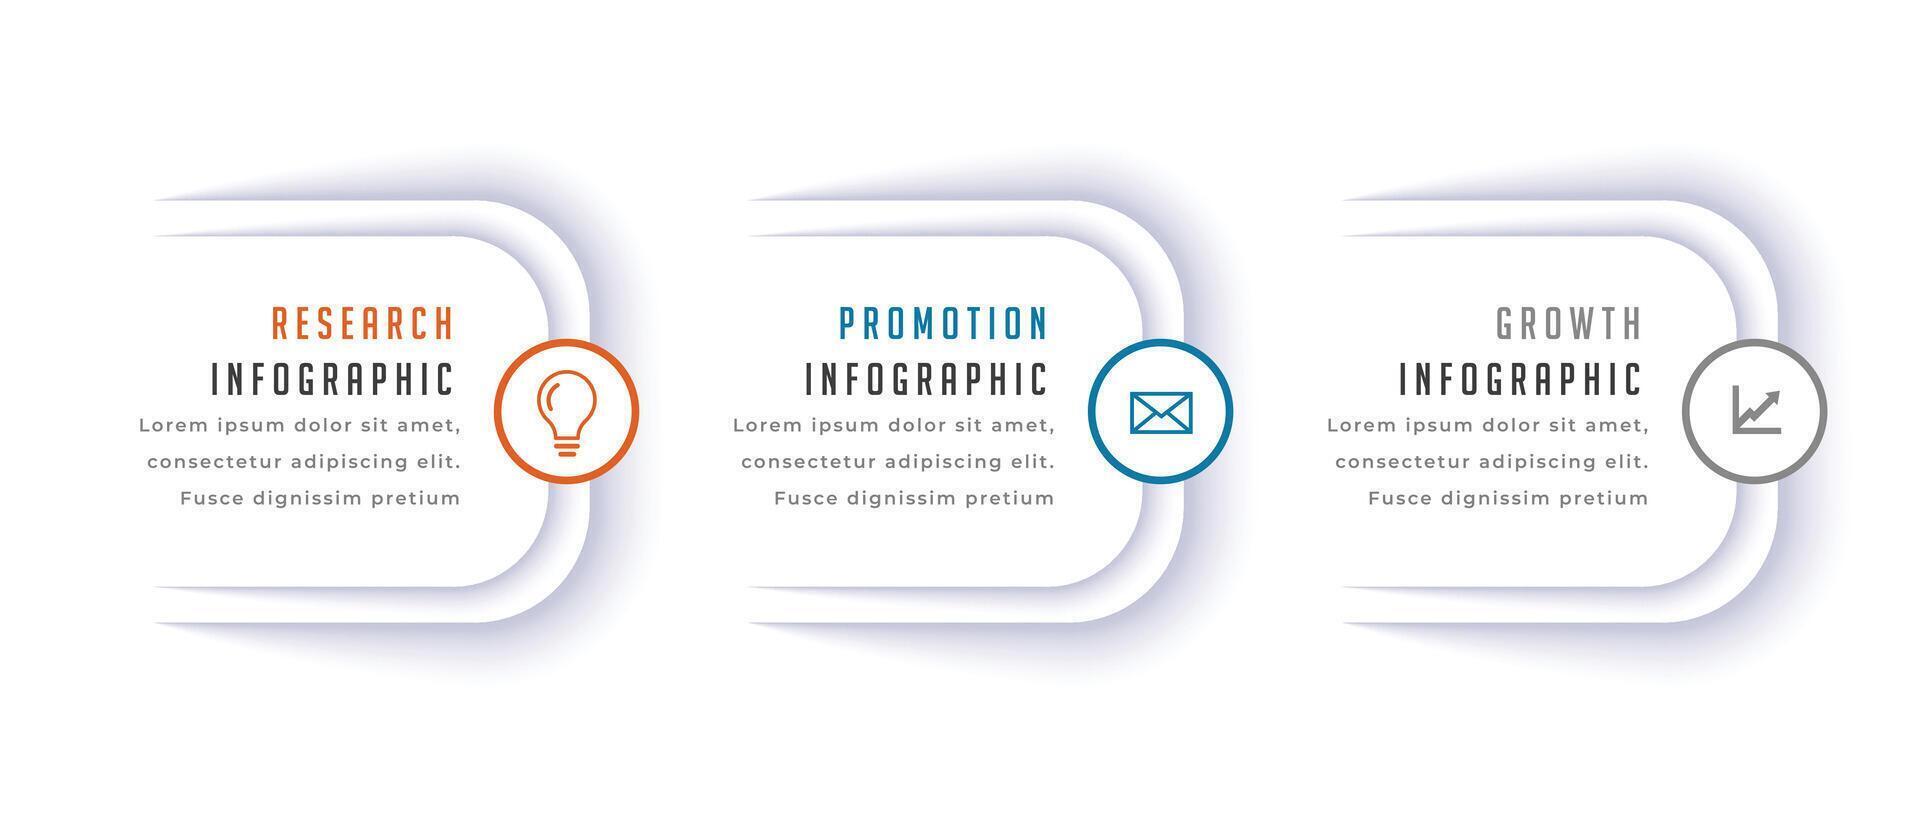 Tres pasos infografía éxito gráfico bandera para negocio presentación vector